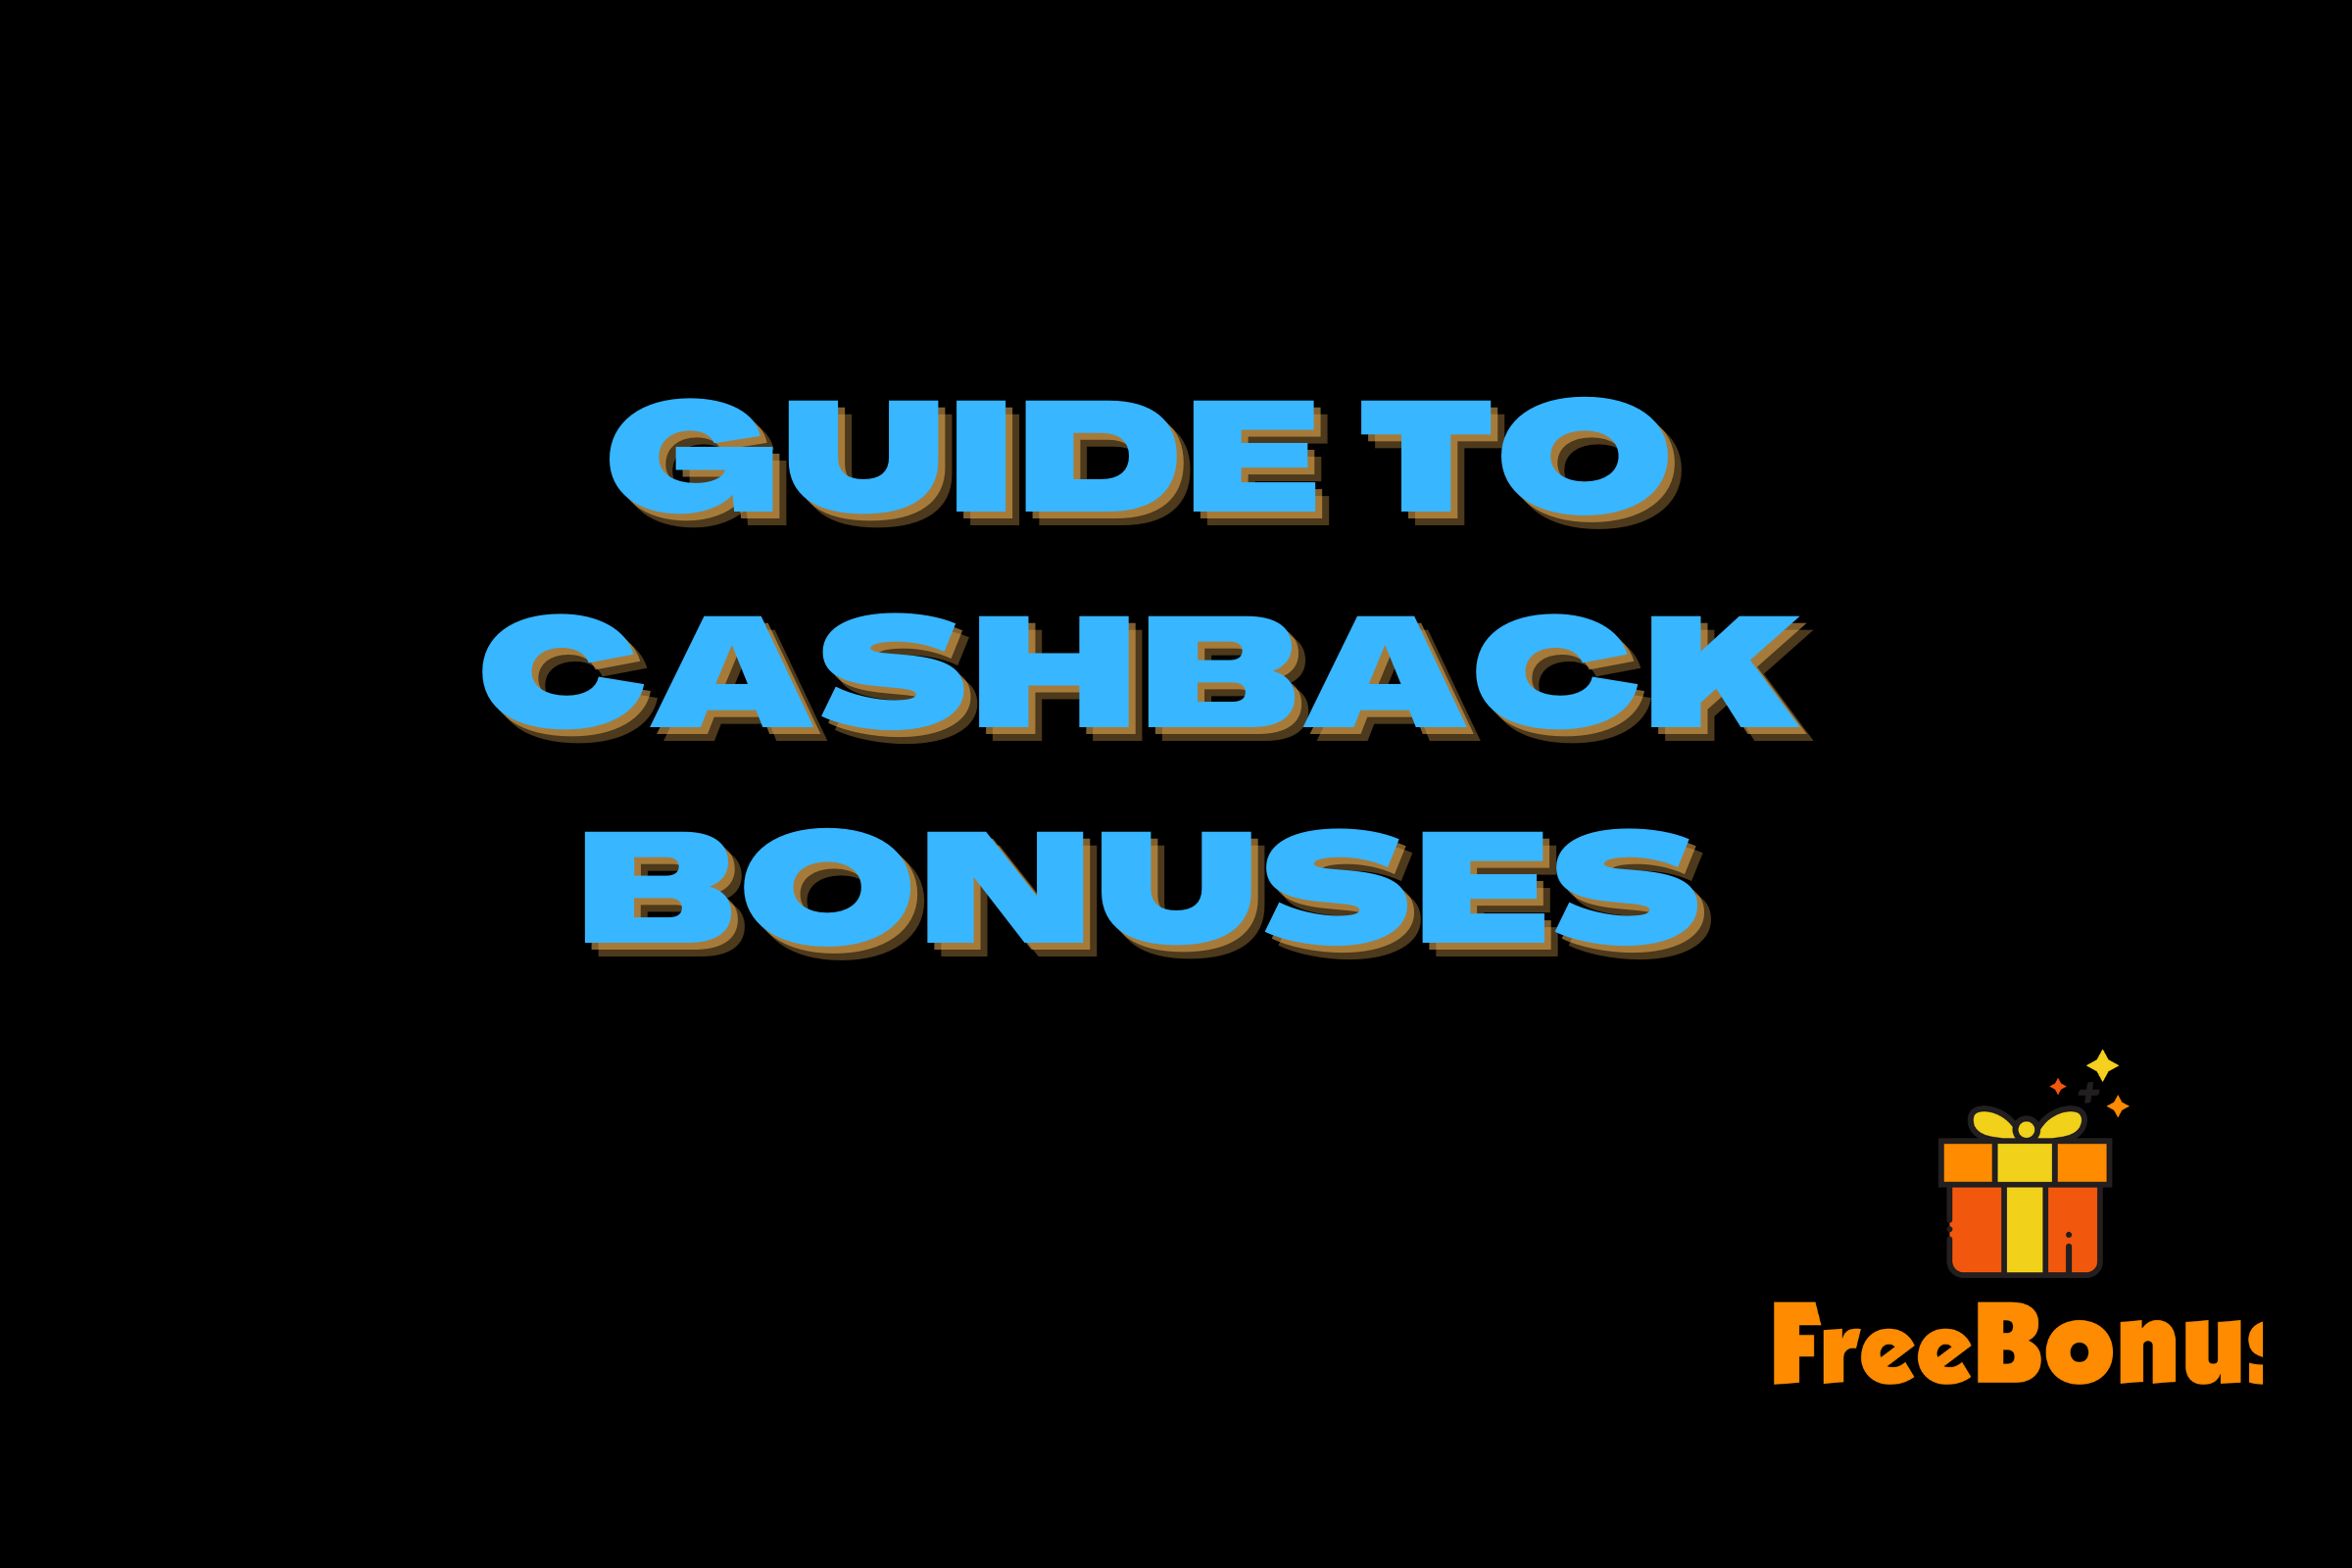 Cash Back Casino Bonus: How Does it Work?